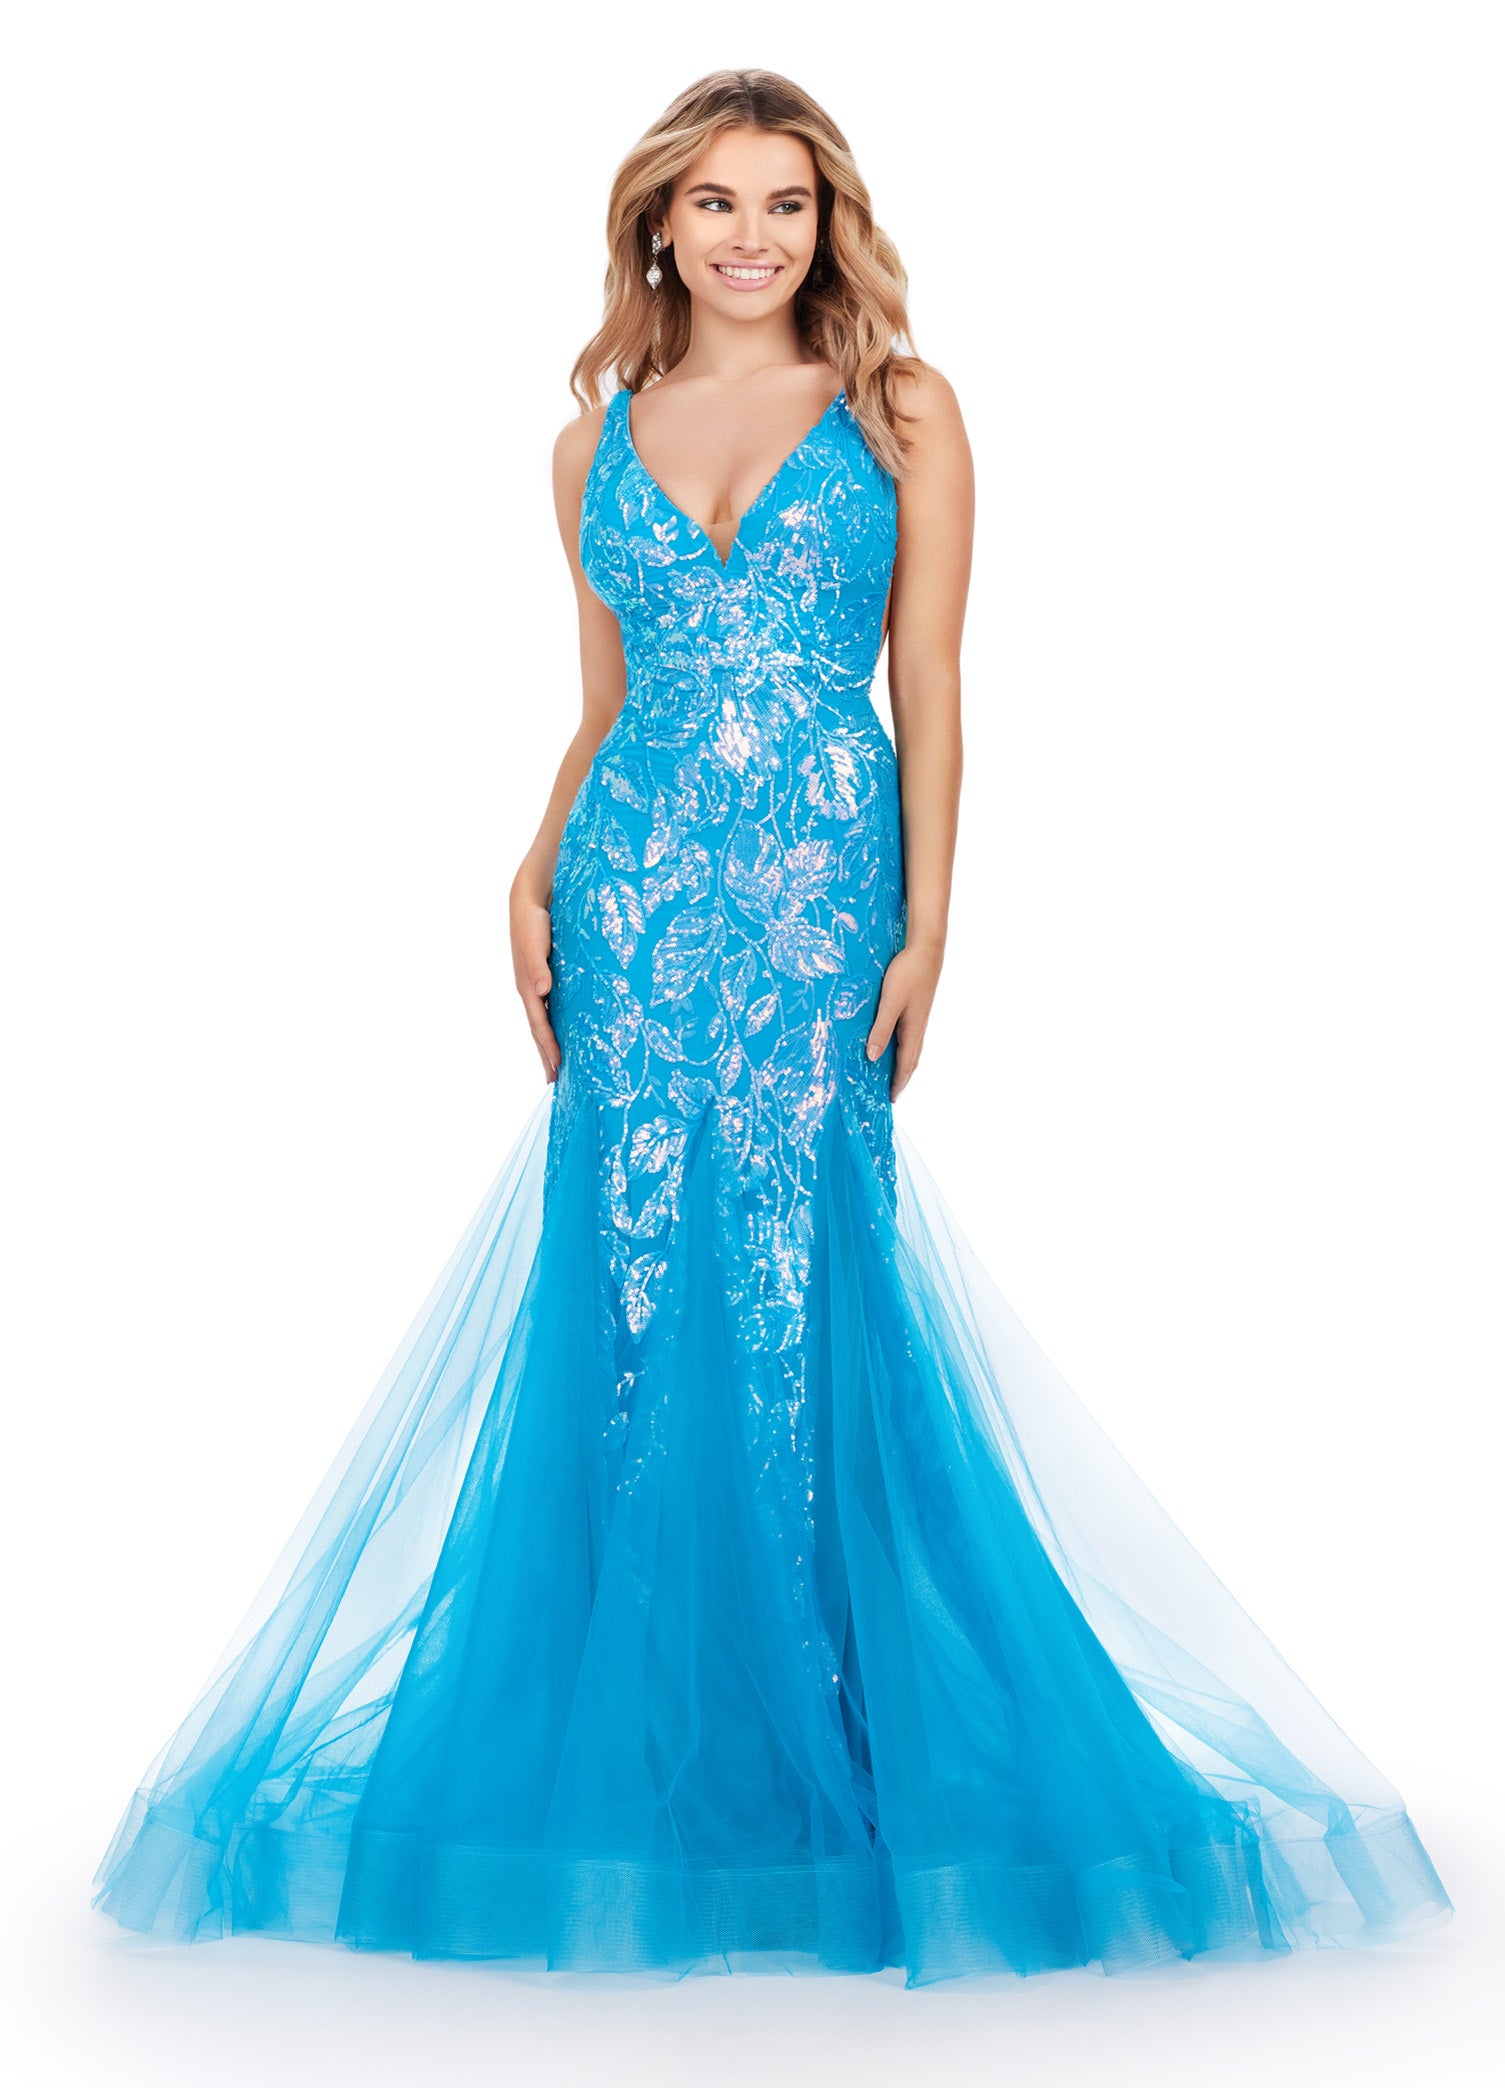 Ashley Lauren 11472 Long Prom Dress V-Neck Stretch Sequin Gown